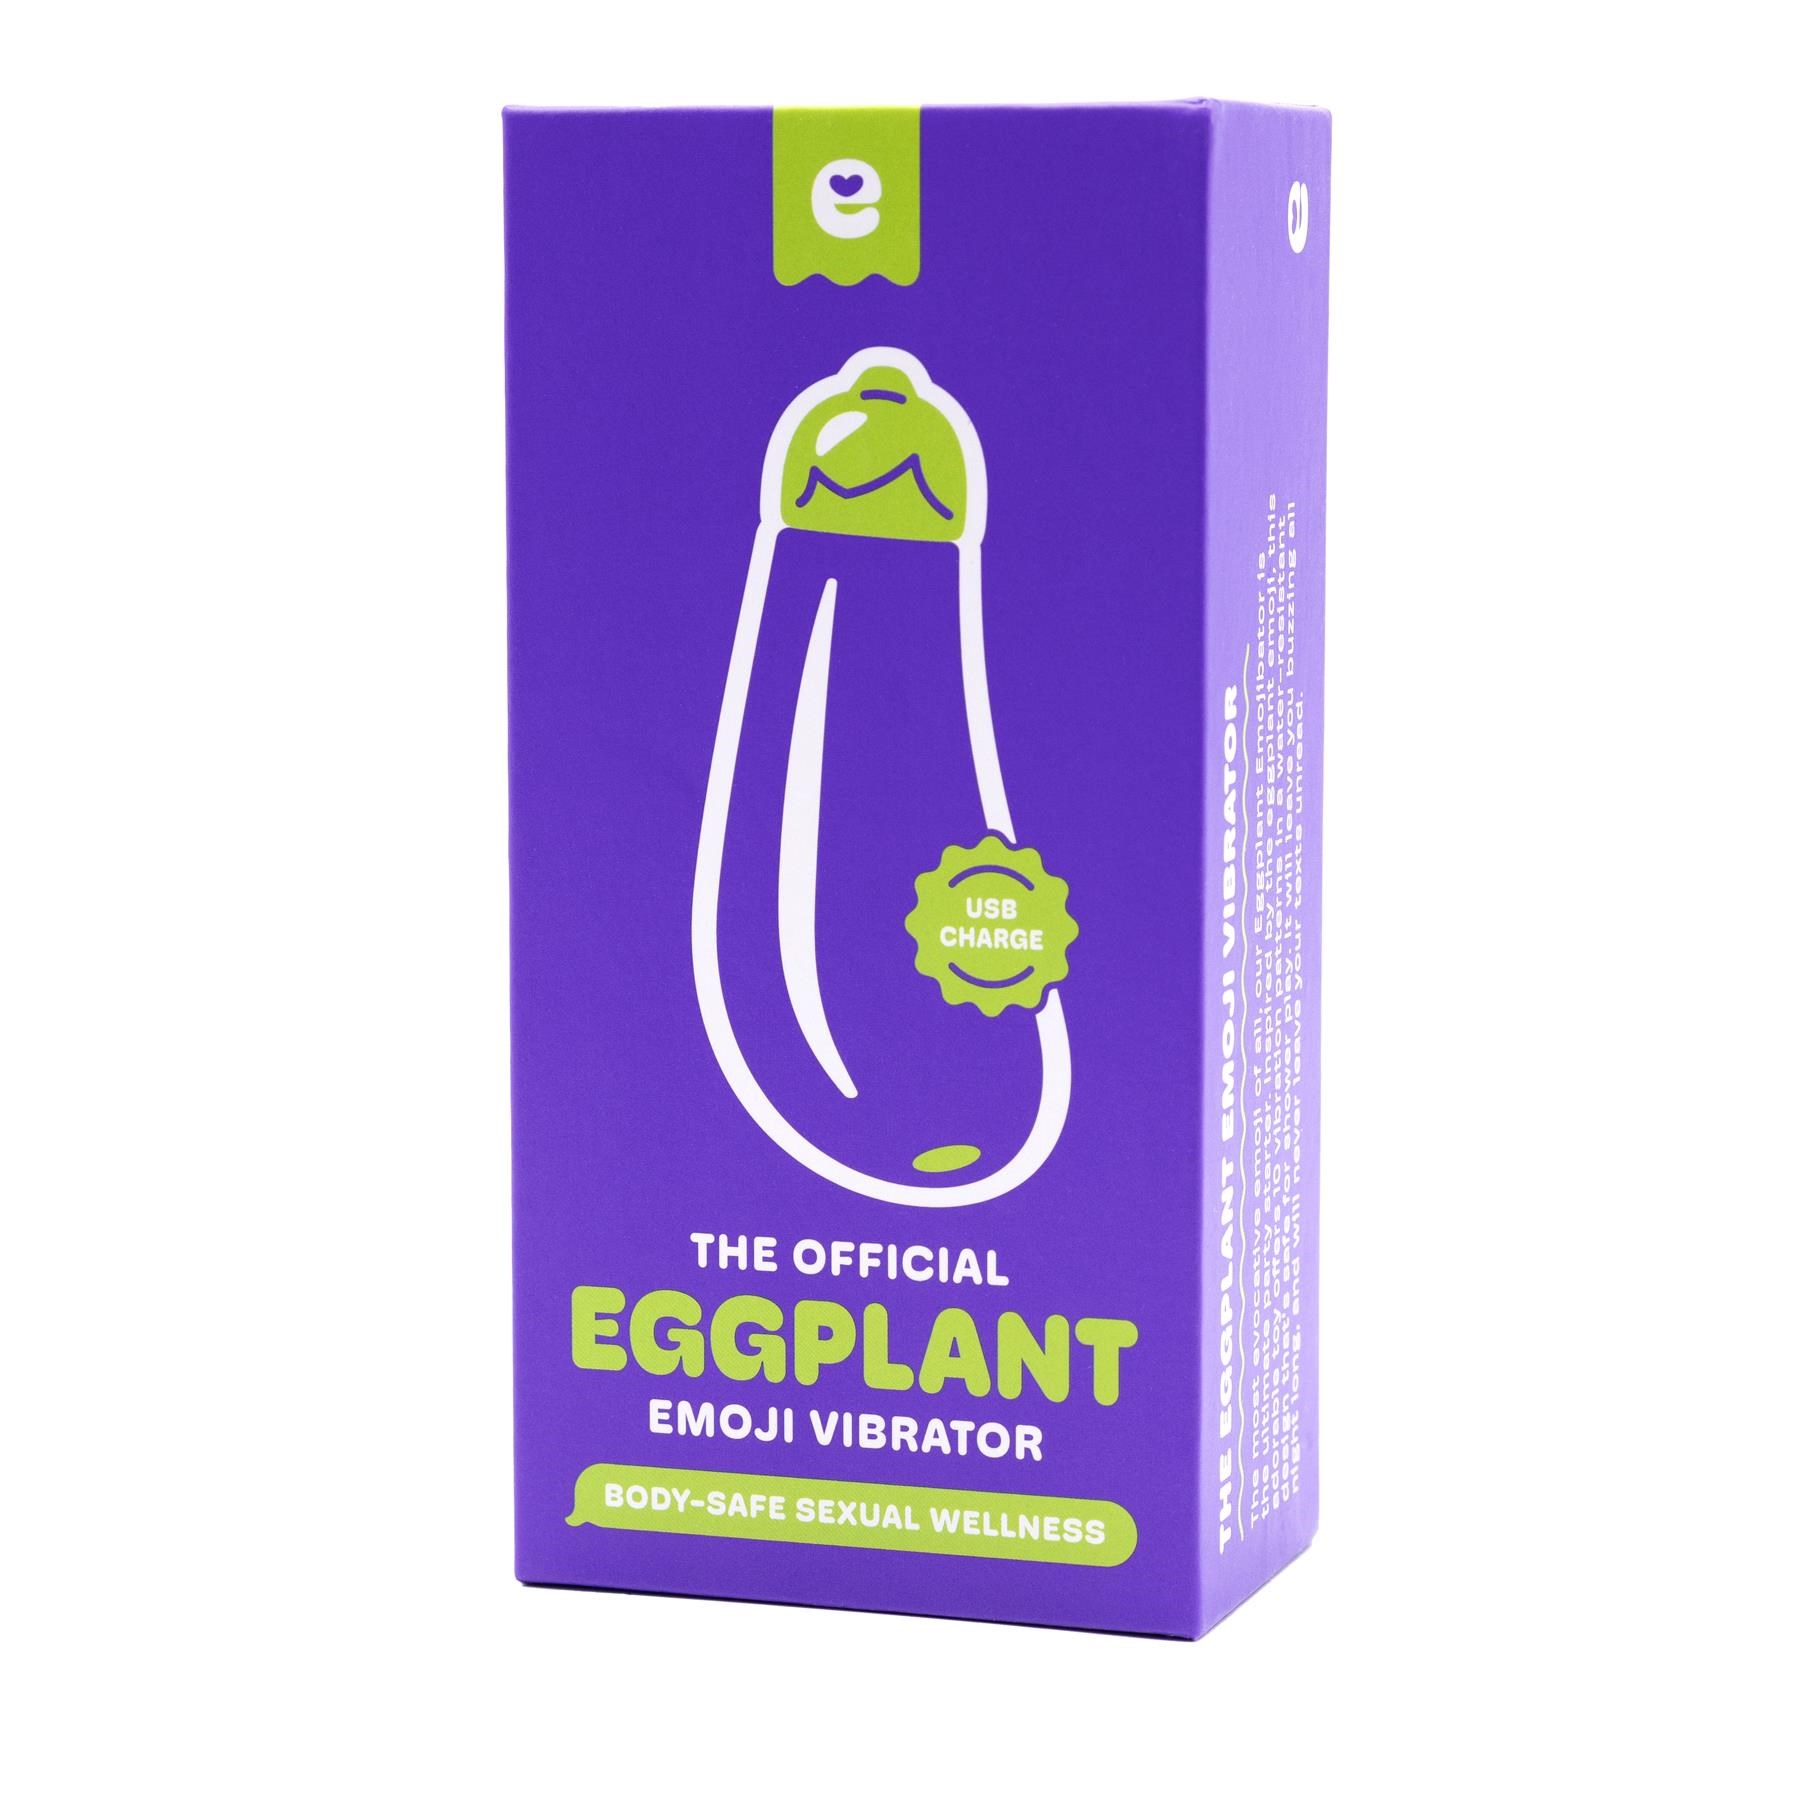 Emojibator Eggplant Emoji Vibrator - Packaging